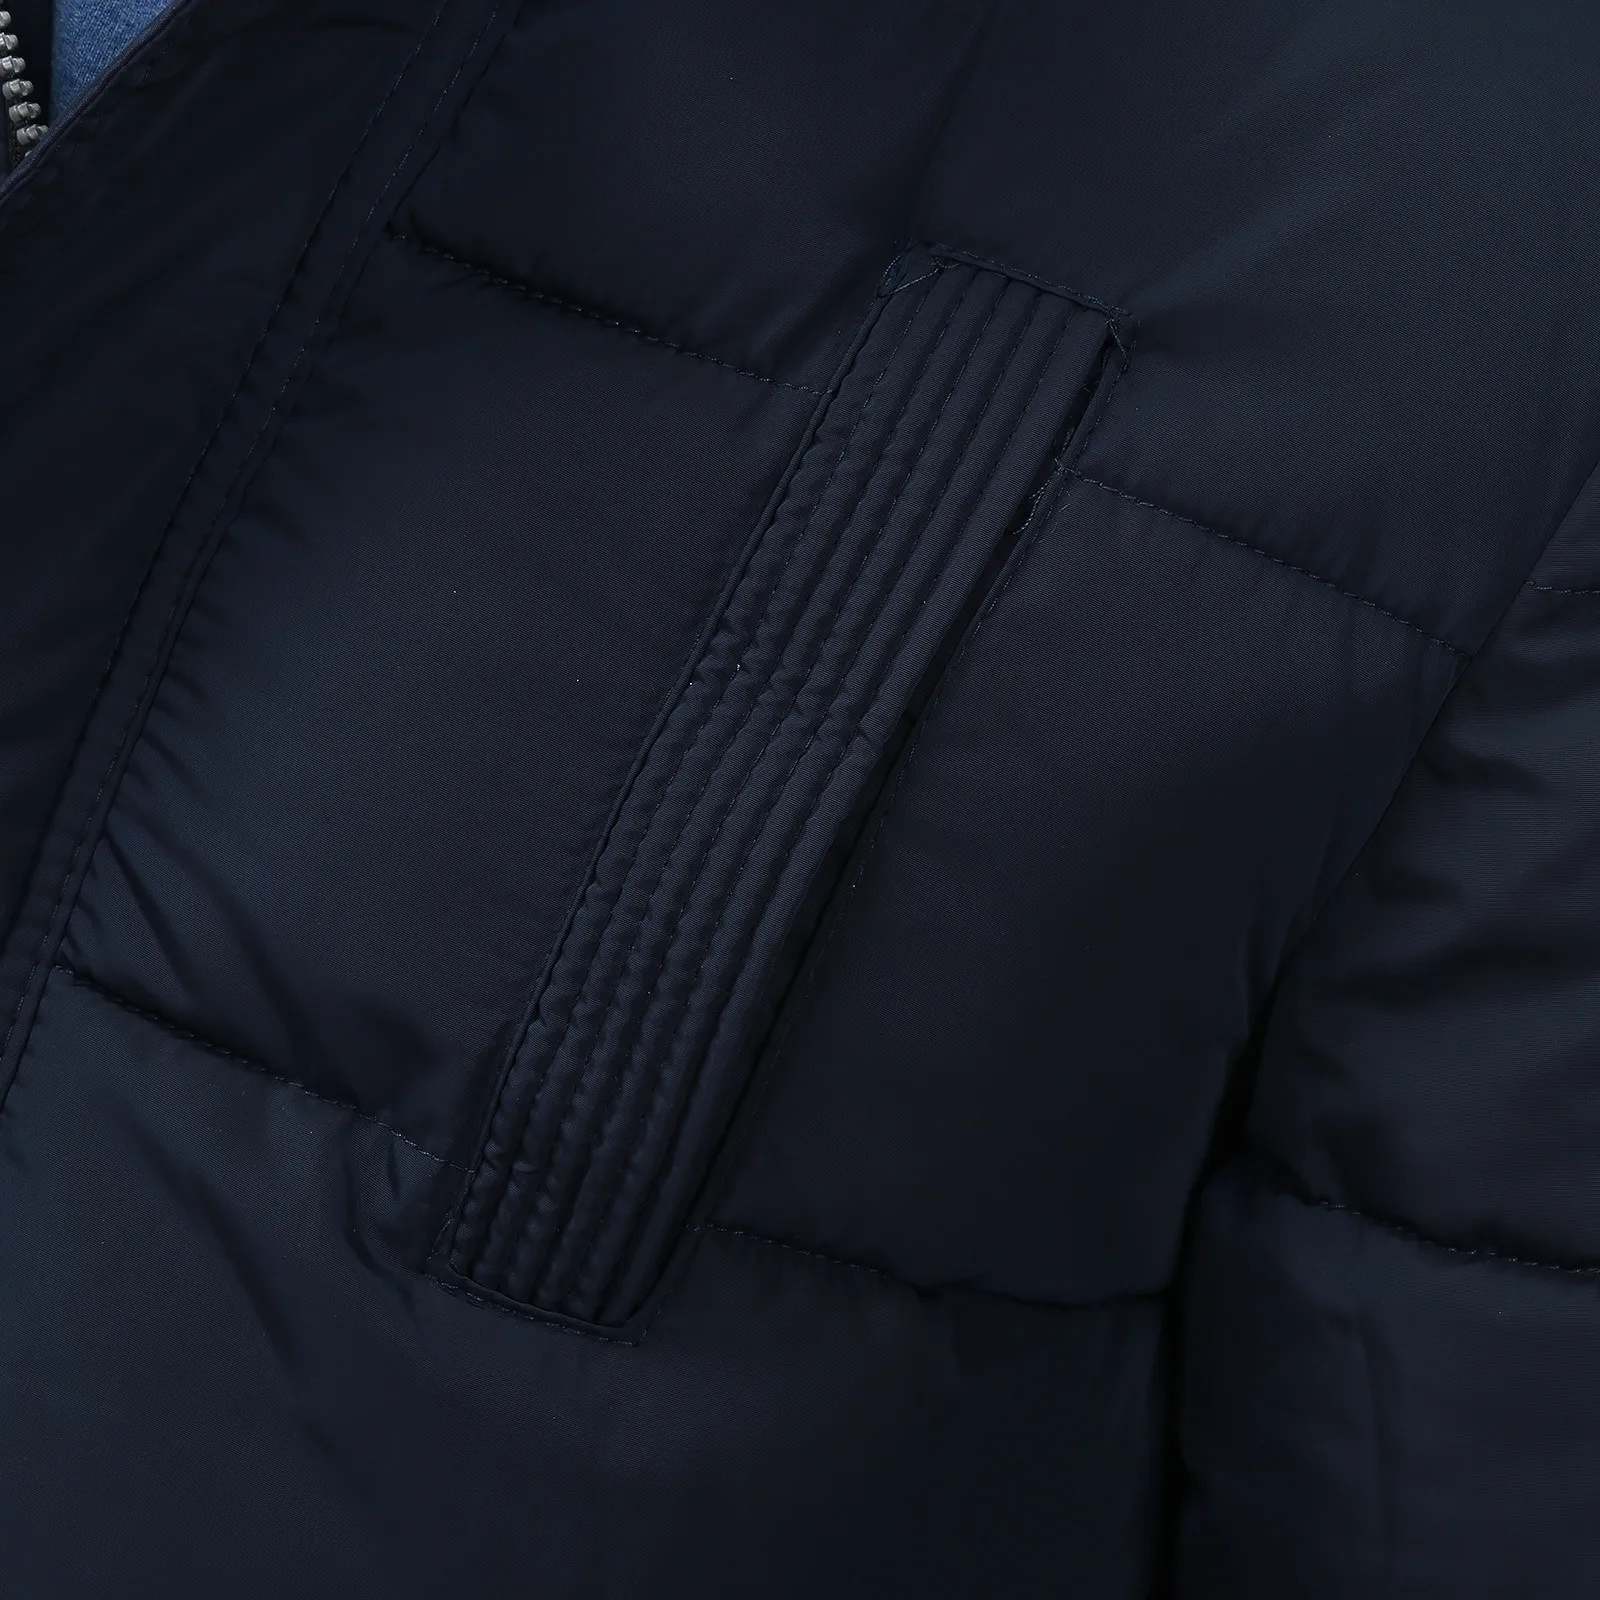 Men Casual Winter Jacket Parkas Solid Zipper Pocket Long Sleeve Coat Furry Collar Hat Detachable Parkas Thicken Warm Coat long down puffer coat